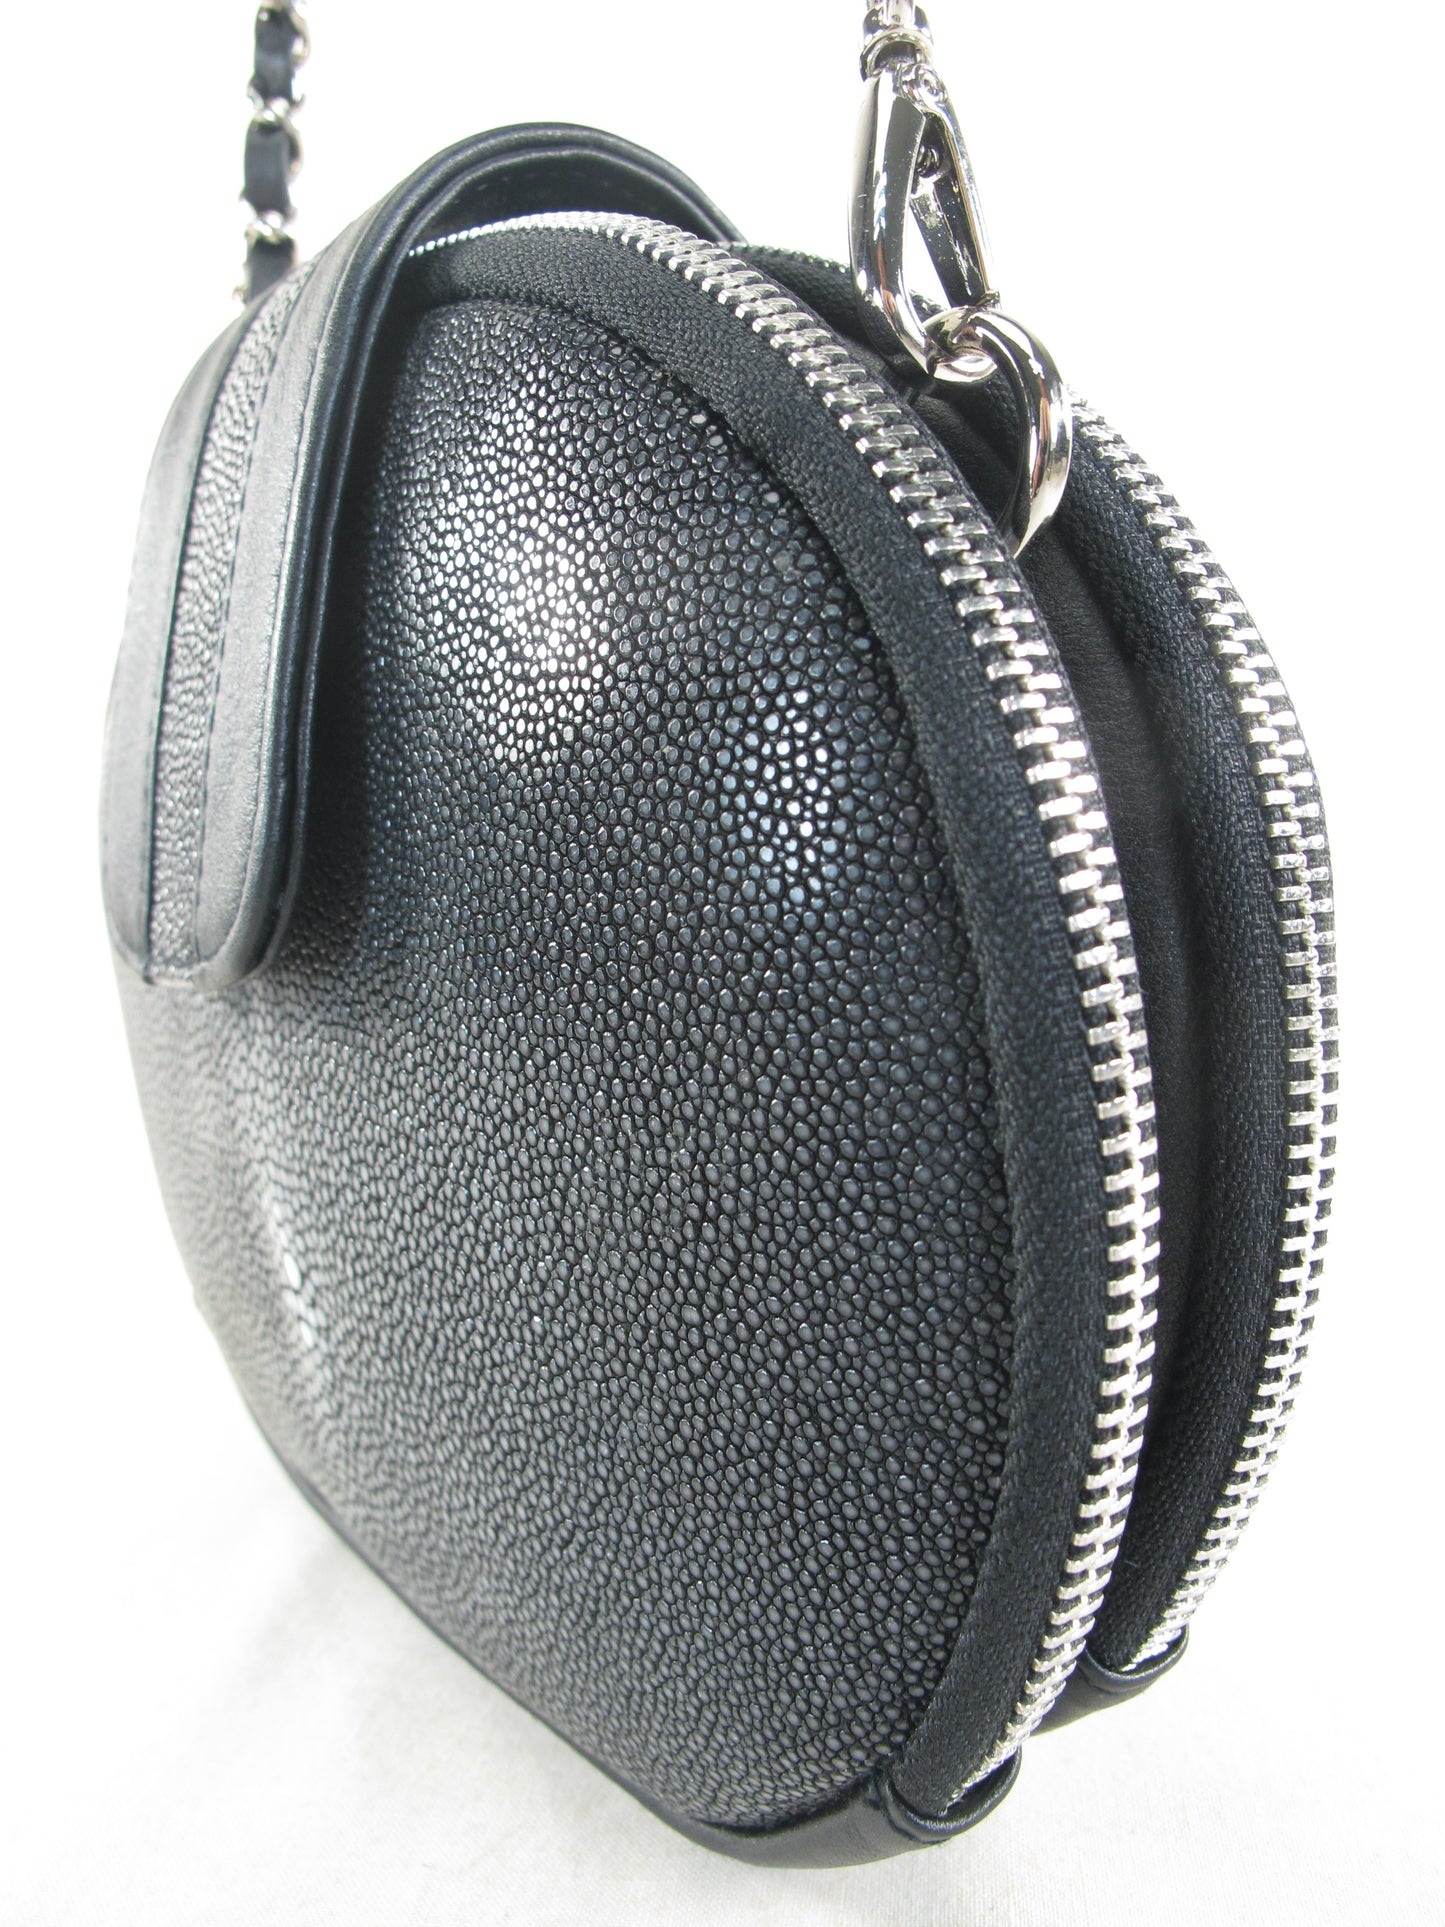 PELGIO Genuine Polished Stingray Skin Leather Women's Double Zip Shoulder Bag Purse